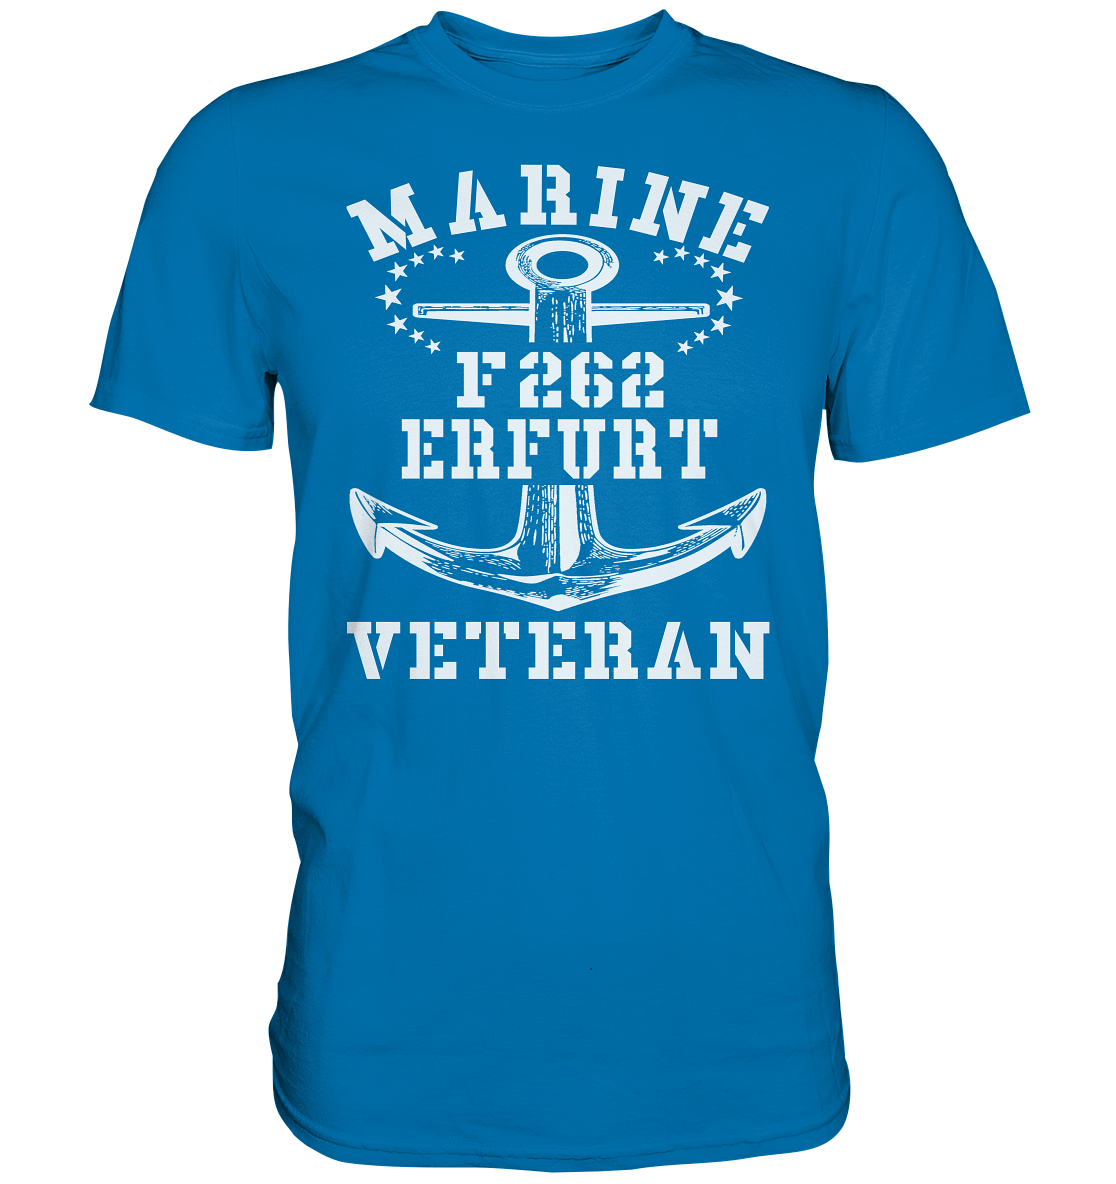 Korvette F262 ERFURT Marine Veteran - Premium Shirt